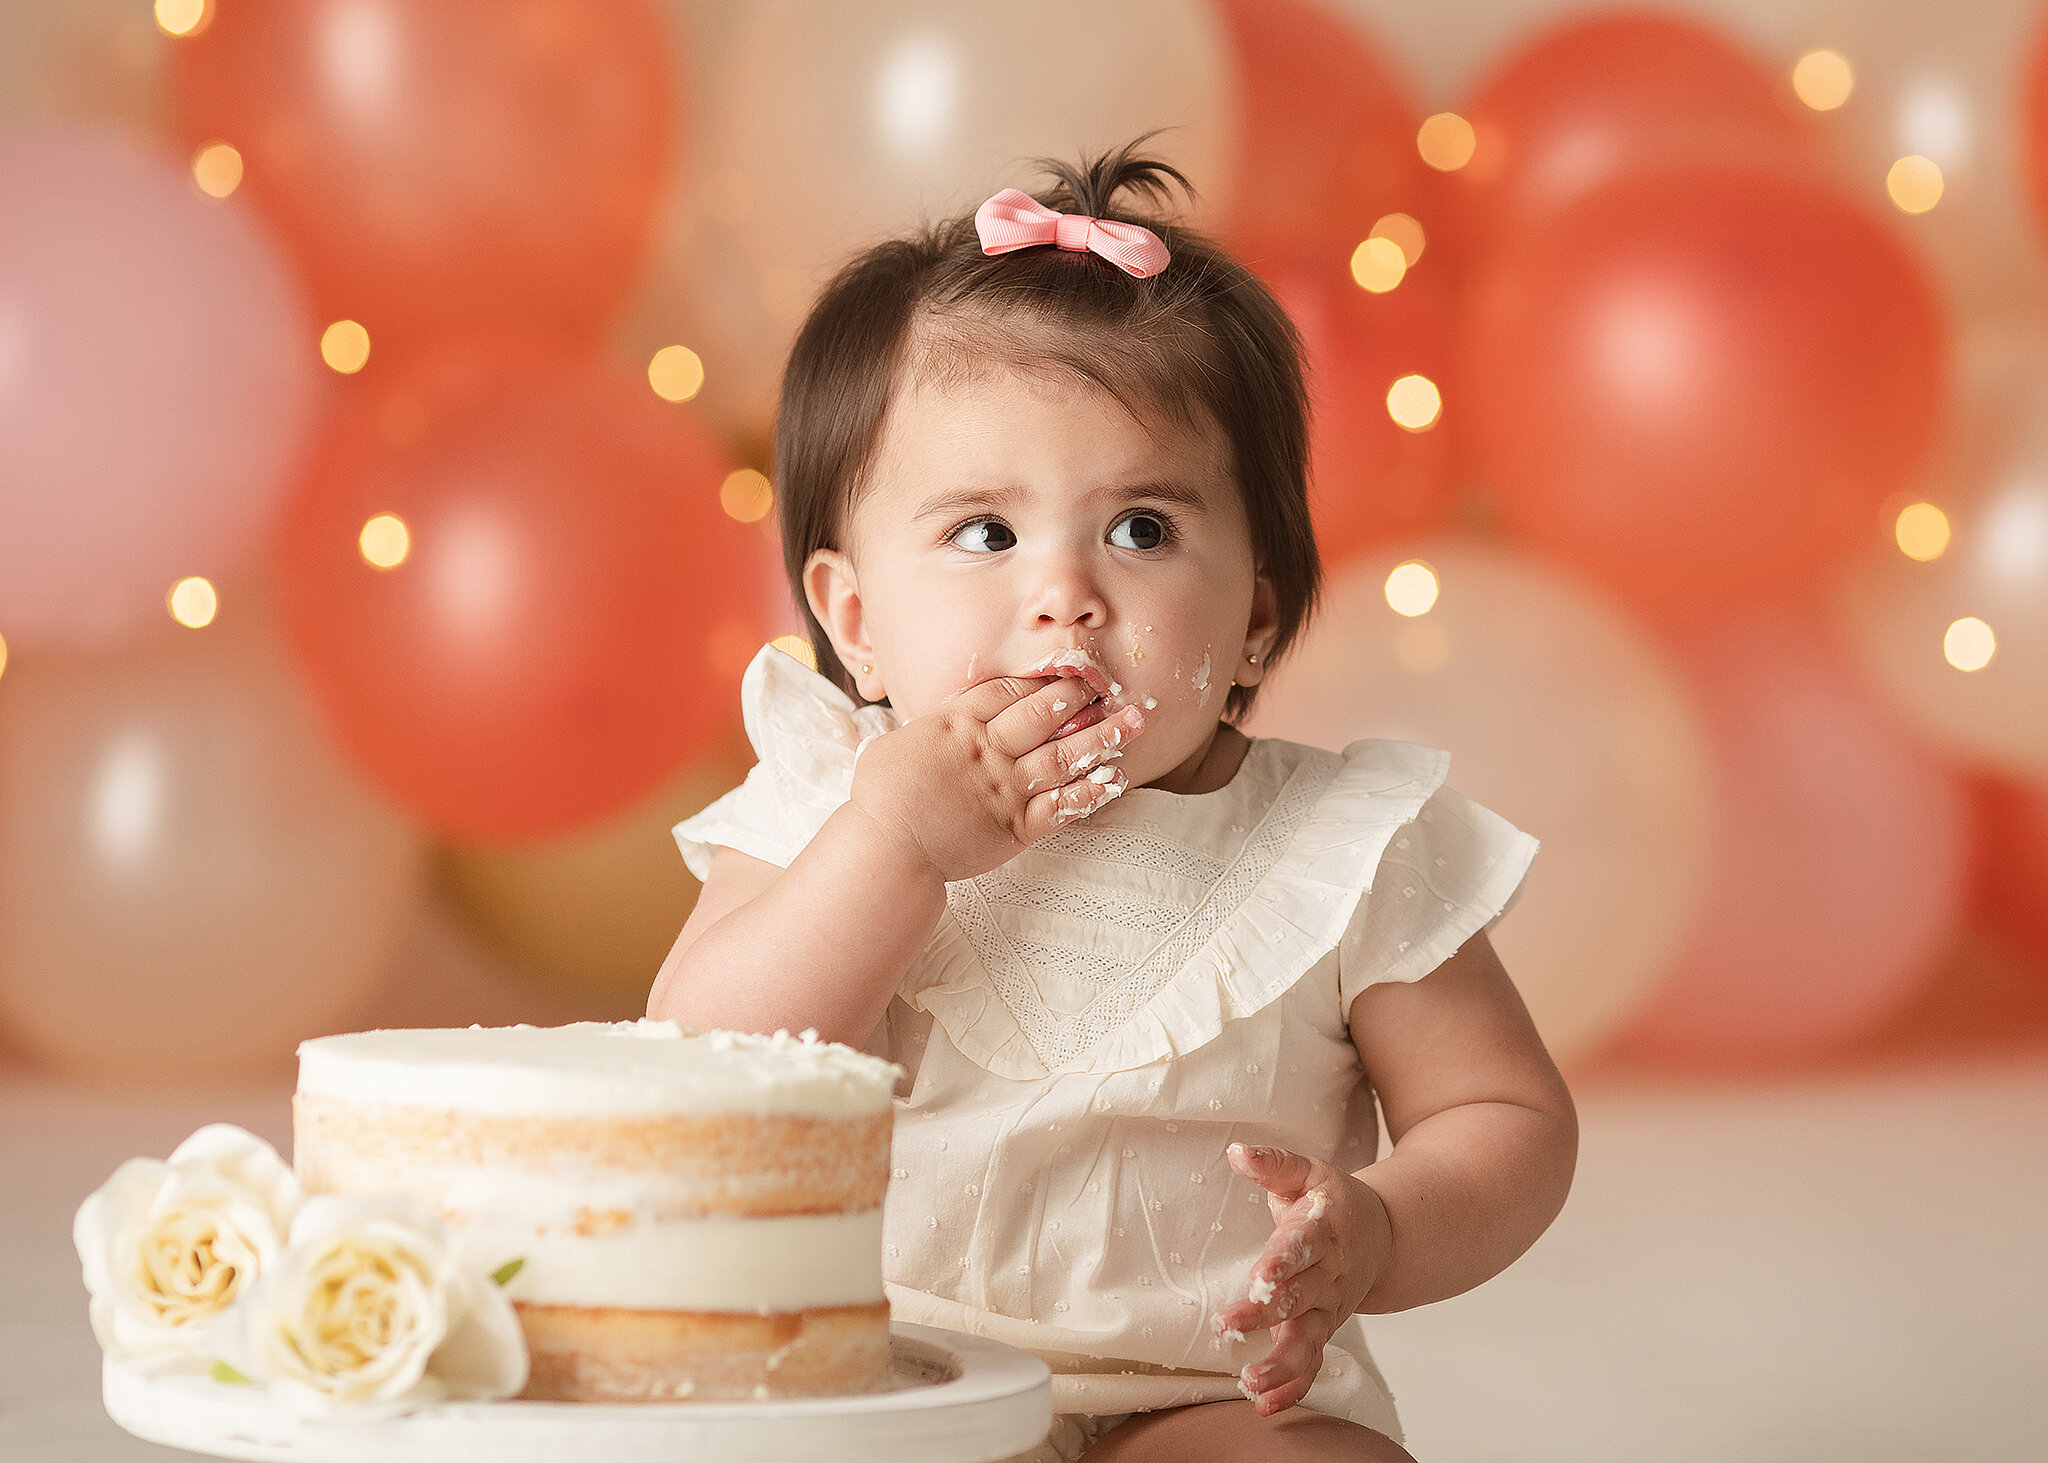 baby girl eating cake with balloon backdrop